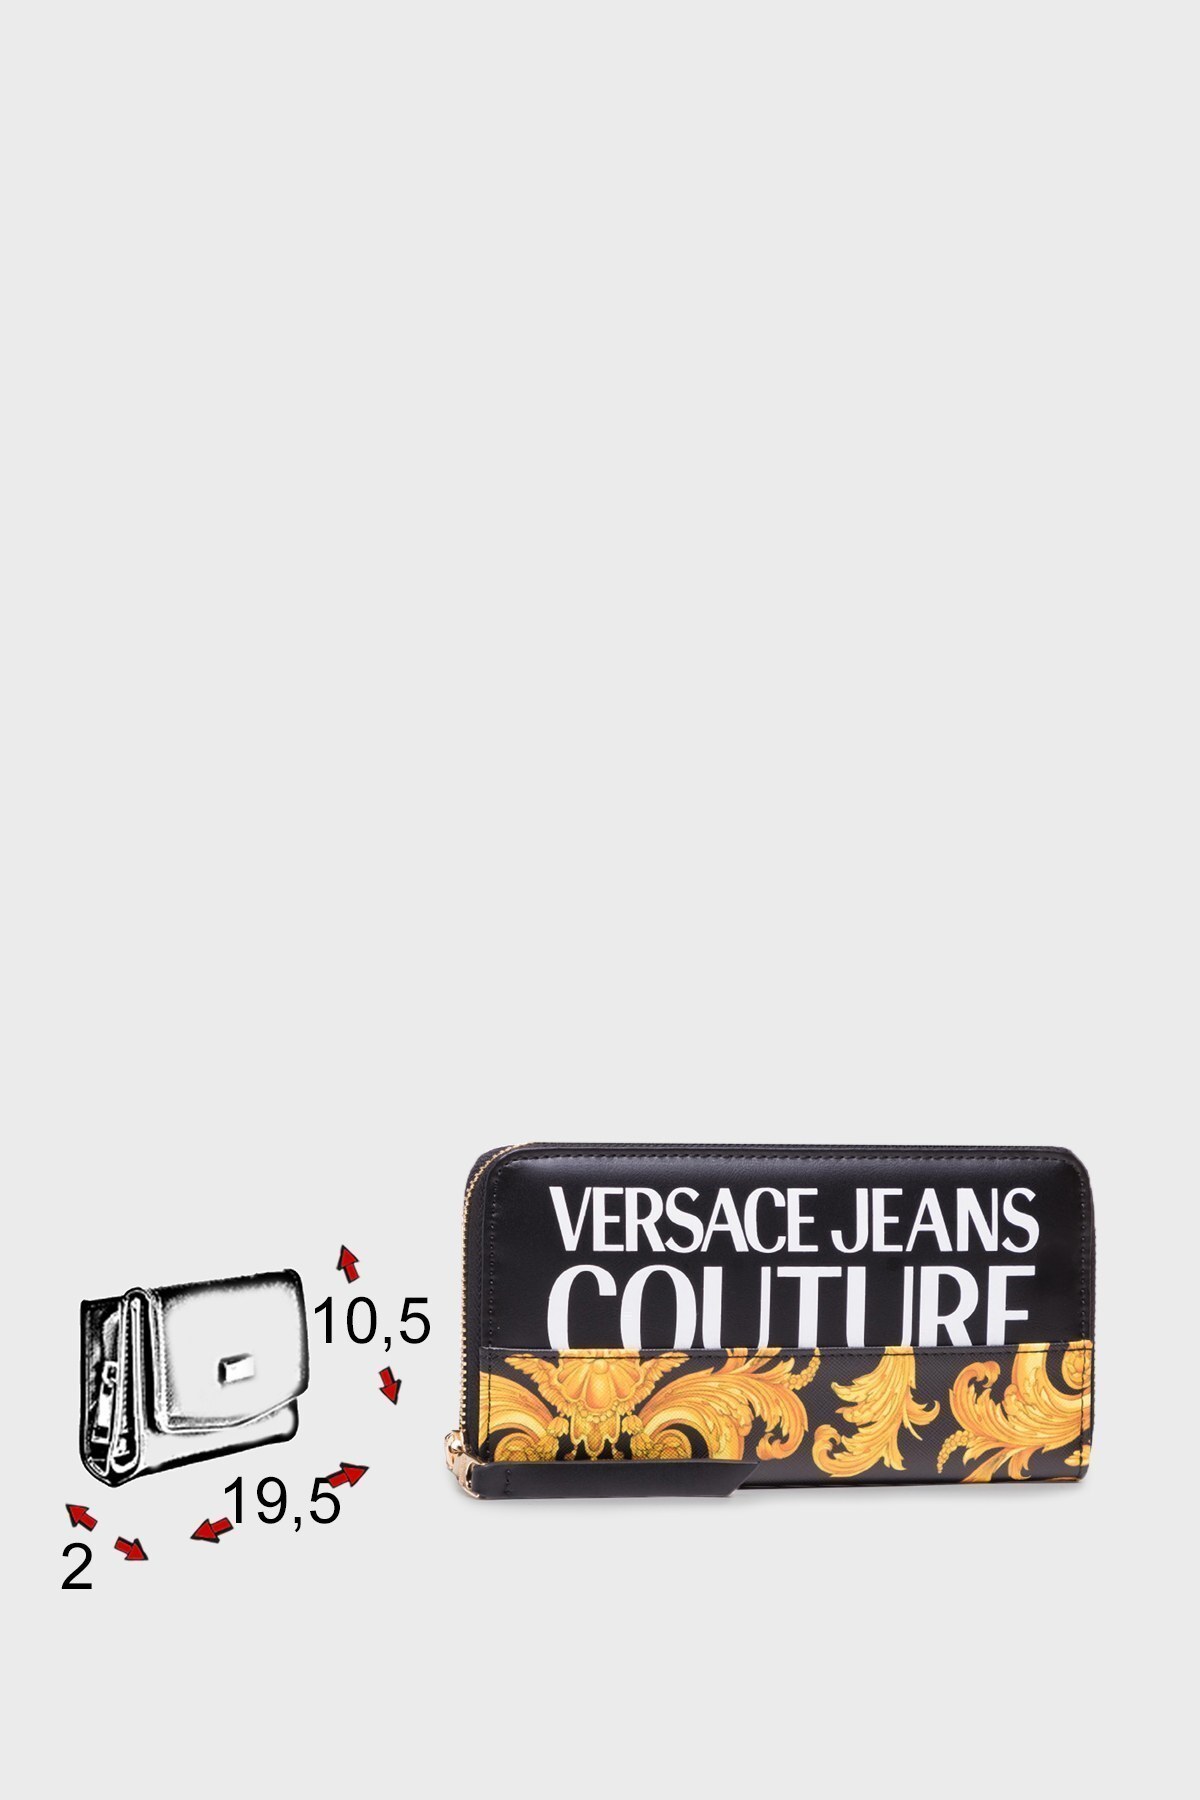 Versace Jeans Couture Bayan Cüzdan E3VWAPG1 71727 M27 SİYAH